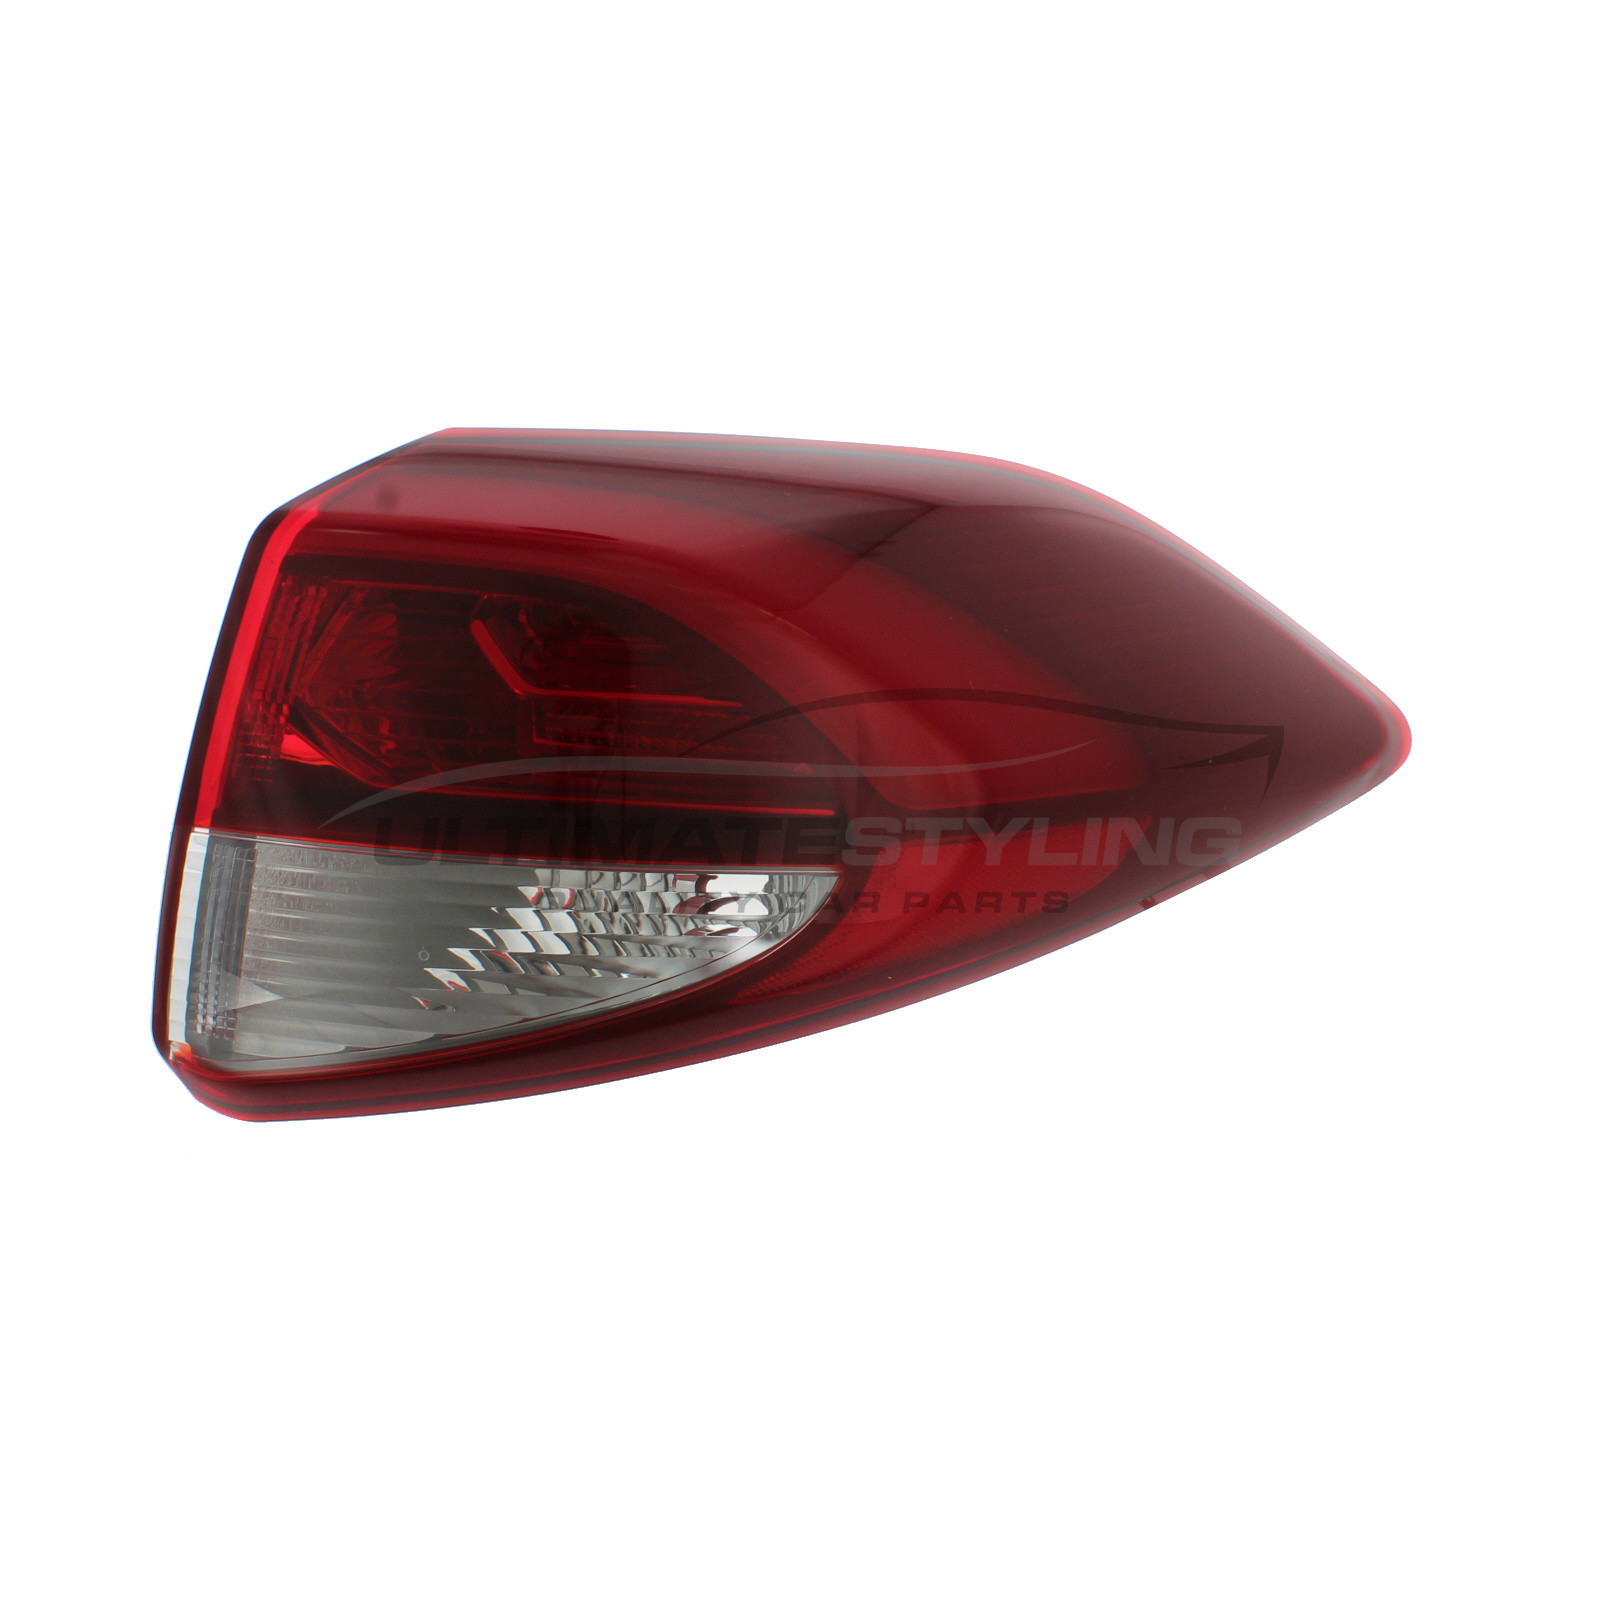 Hyundai Tucson Rear Light / Tail Light  Drivers Side (RH), Rear Outer